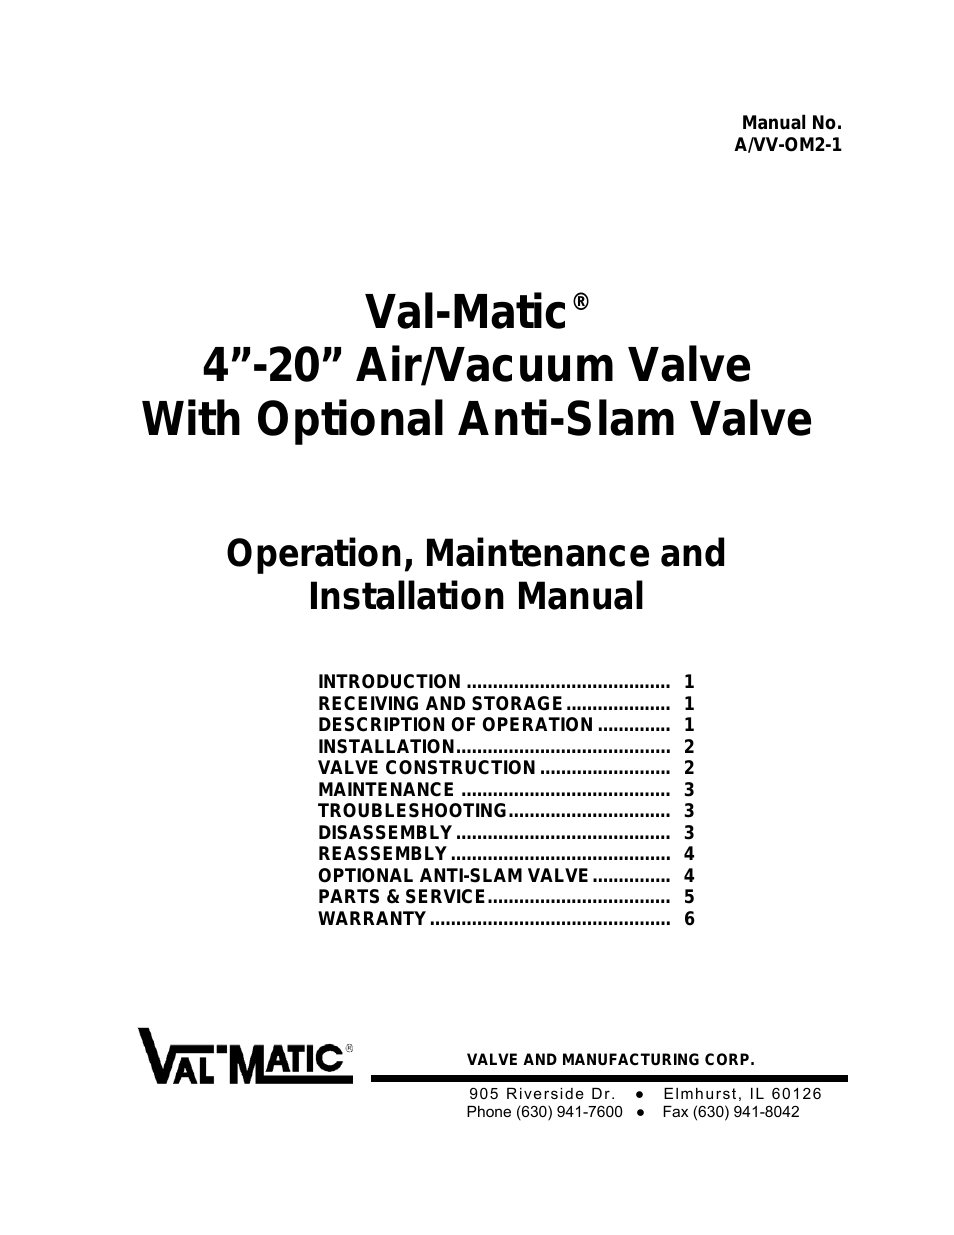 4-20 Air/Vacuum Valve With Optional Anti-Slam Valve